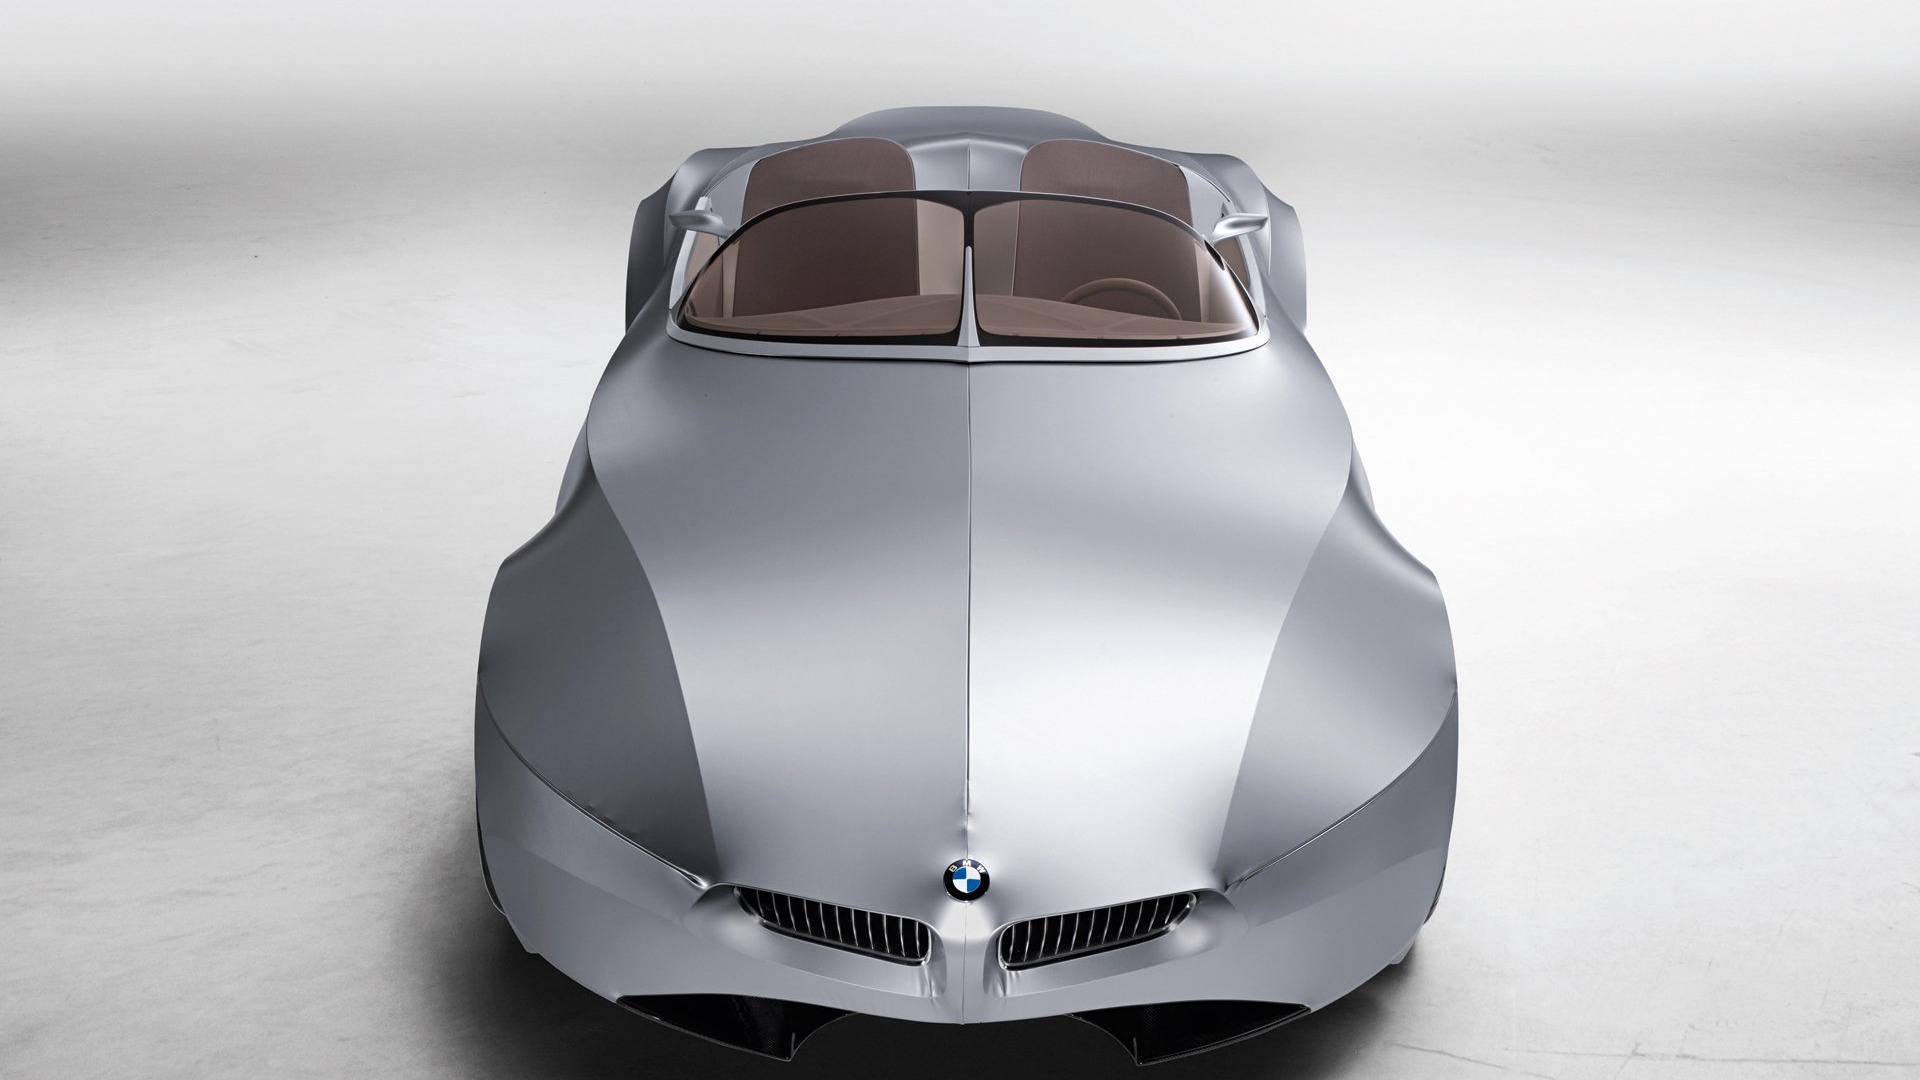 Fond d'écran BMW concept-car (2) #17 - 1920x1080